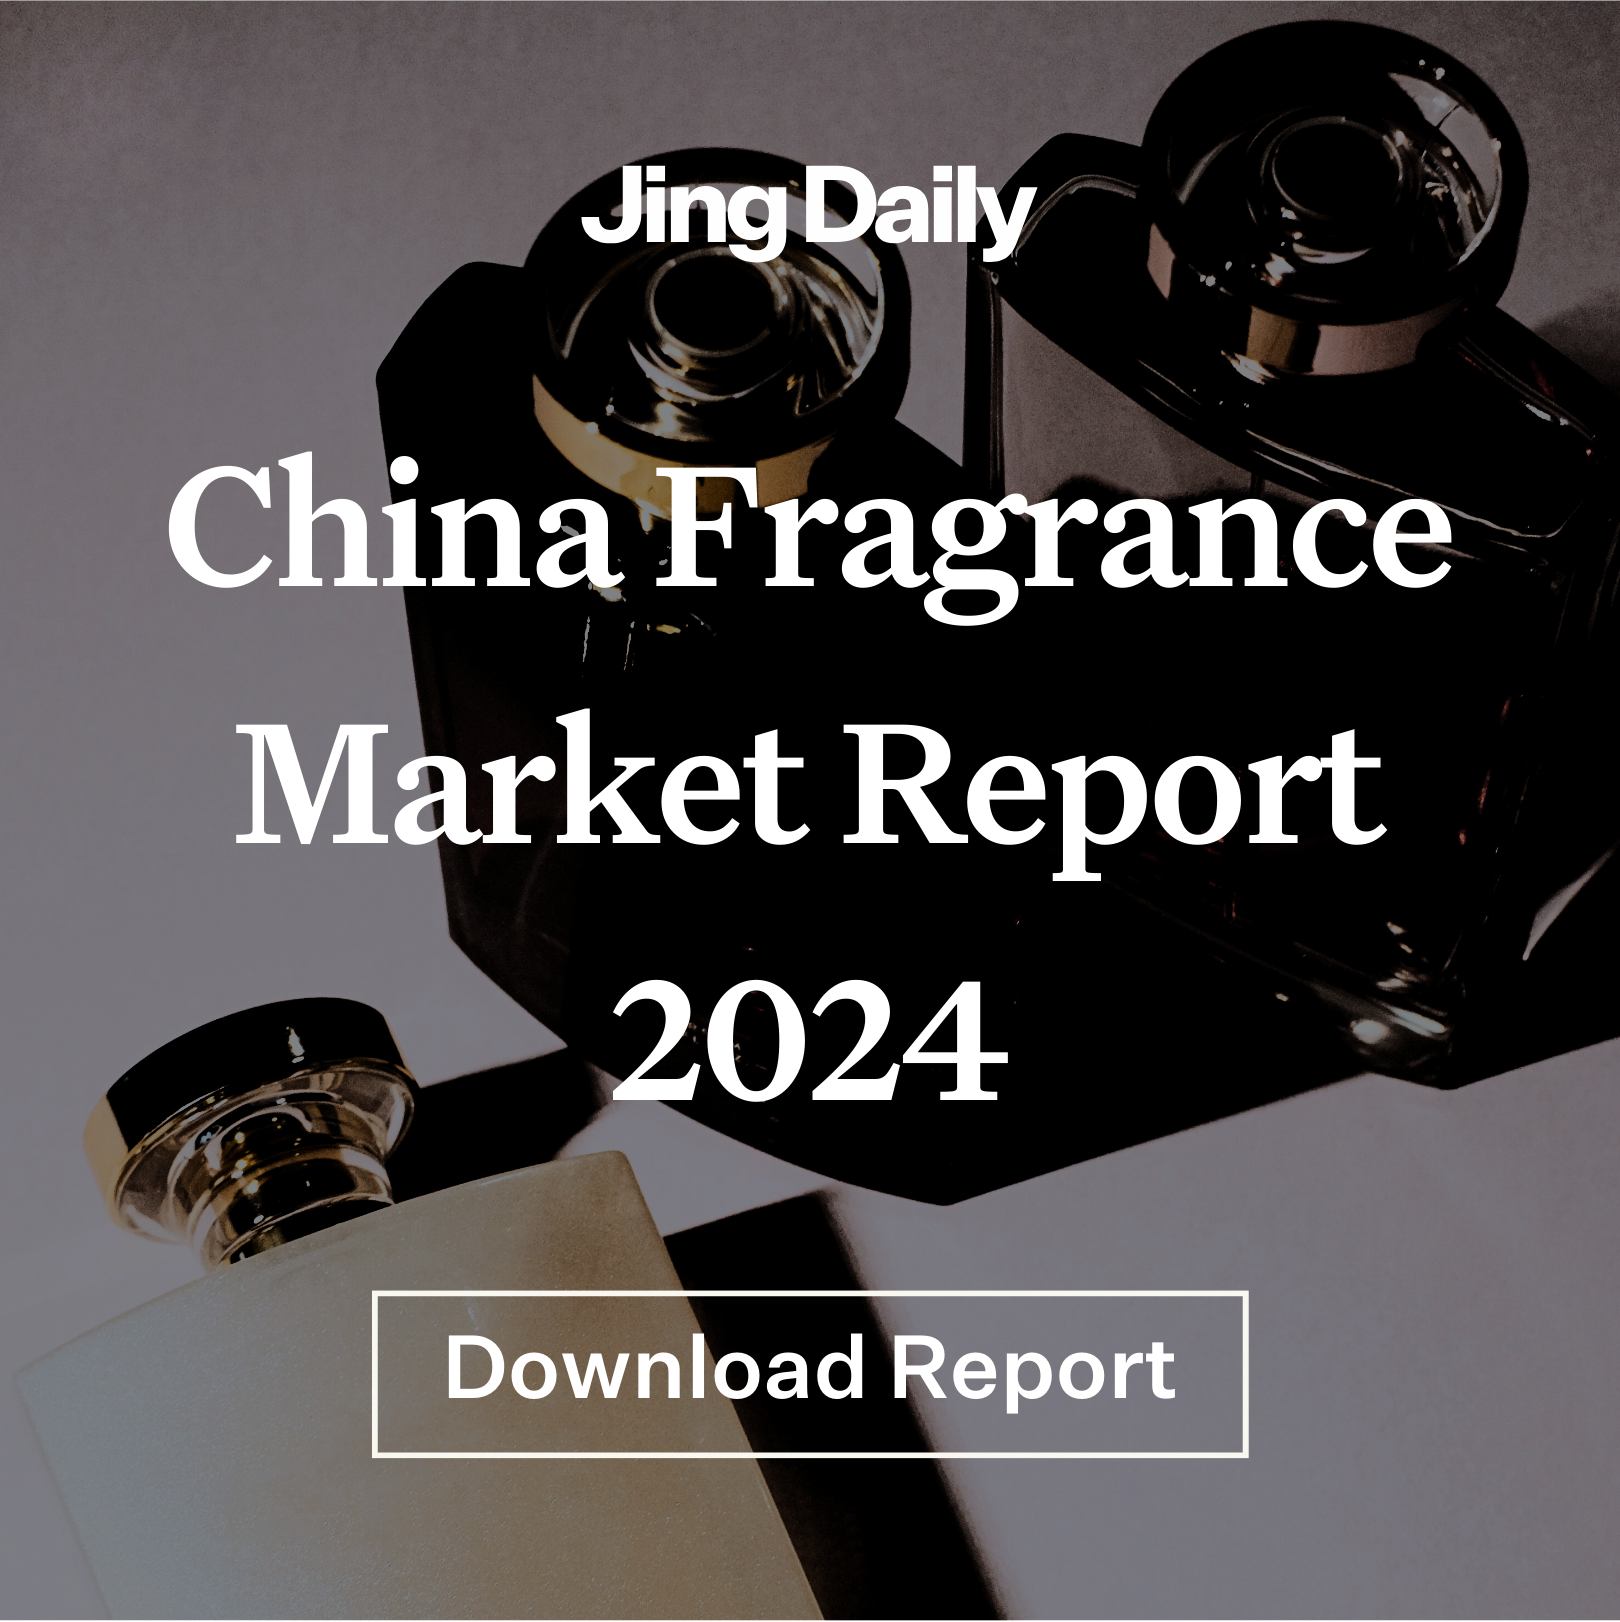 China Fragrance Market Report 2024